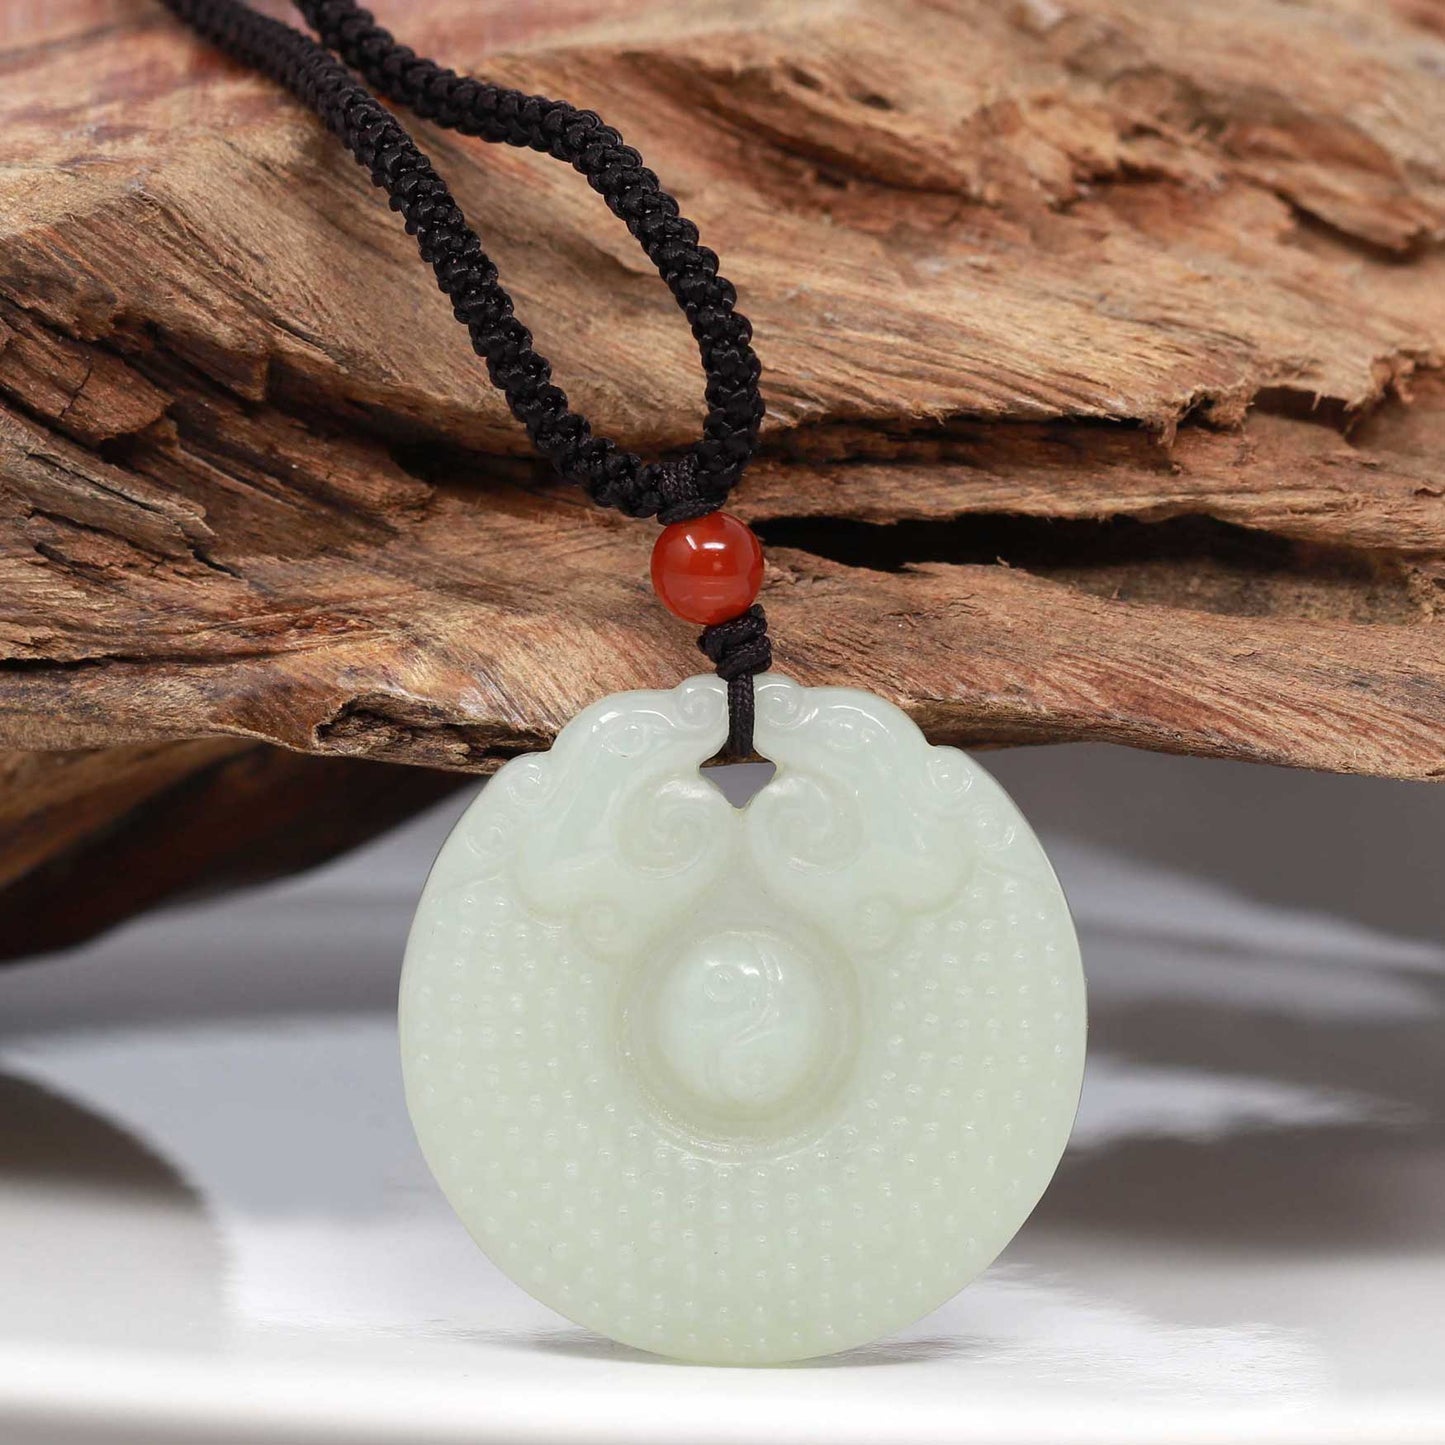 Buddha Pendant Necklace | Real Jade Jewelry | Baikalla Jewelry™